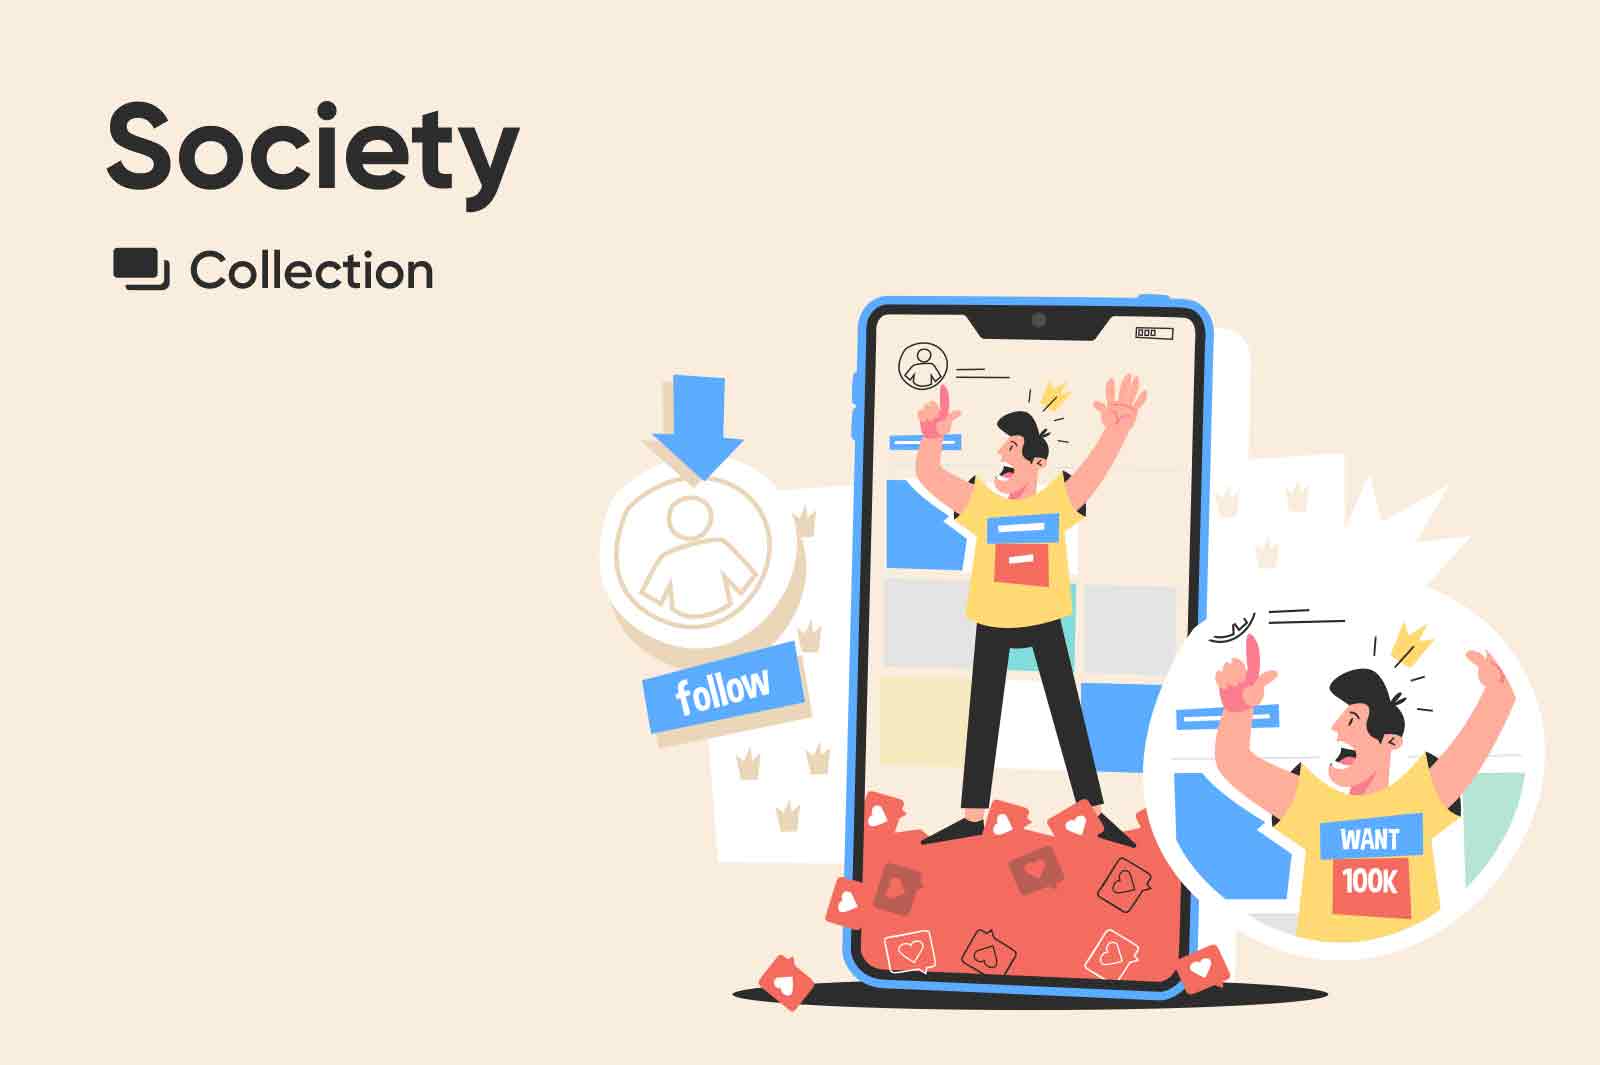 Vector illustrations on social internet life themes.Social network profiles, likes and sharing. Character vector illustrations.